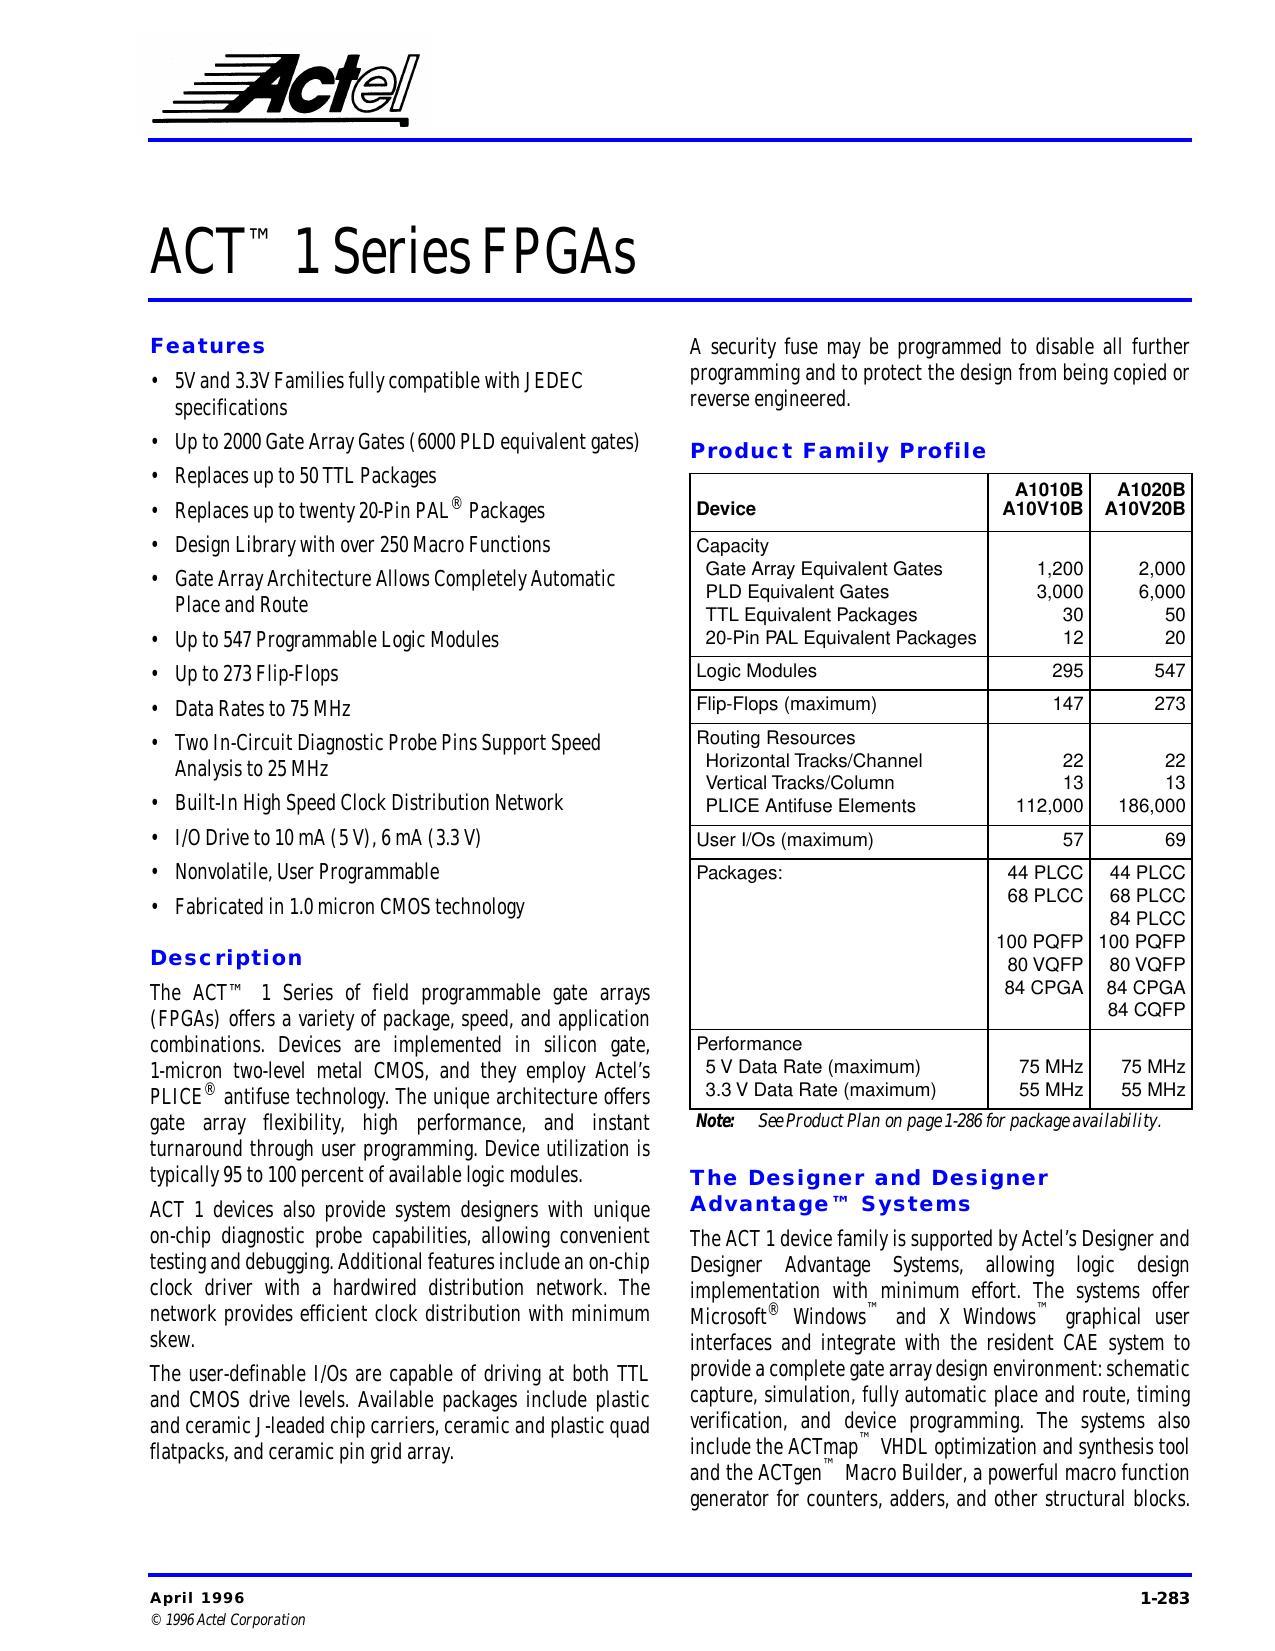 zctel-act-1-series-fpgas.pdf